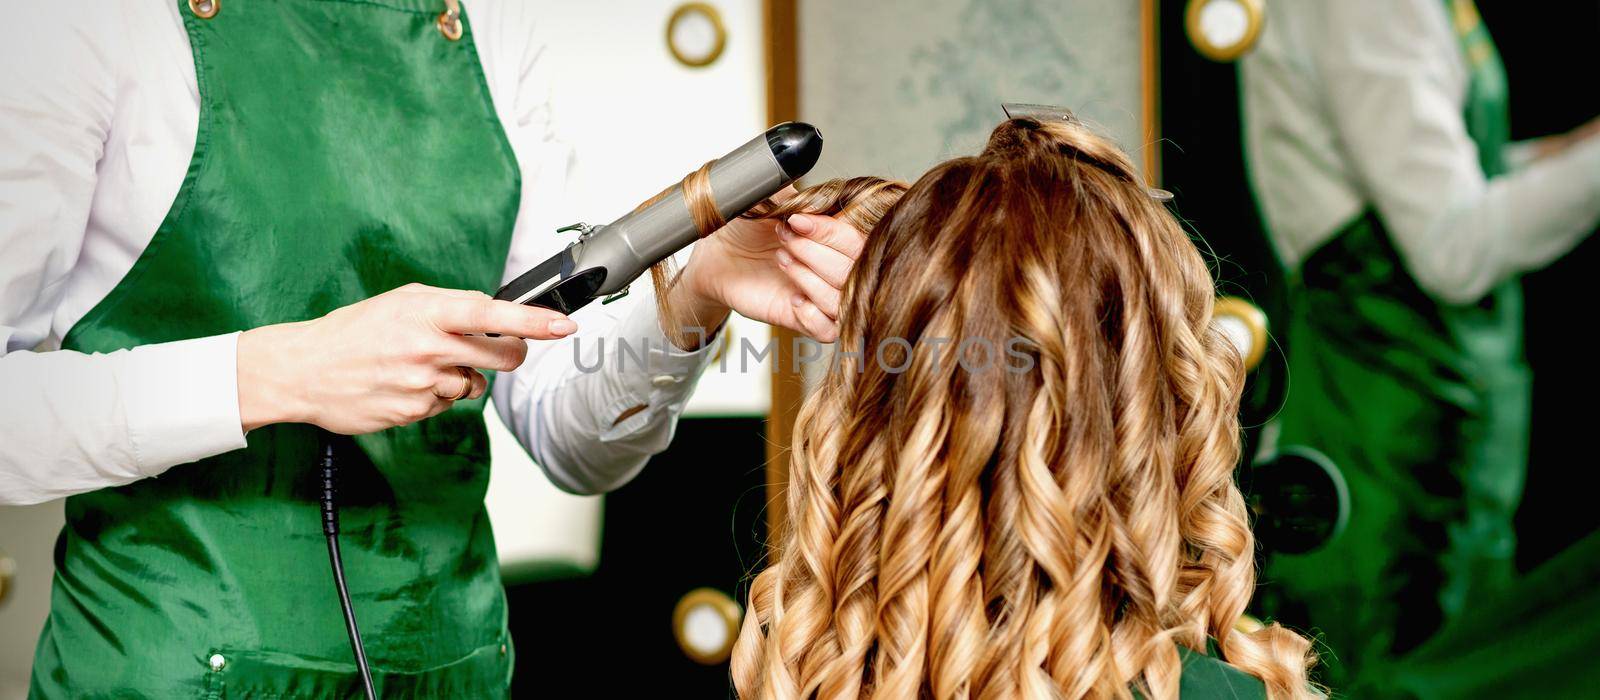 Hairdresser curling hair with curling iron by okskukuruza